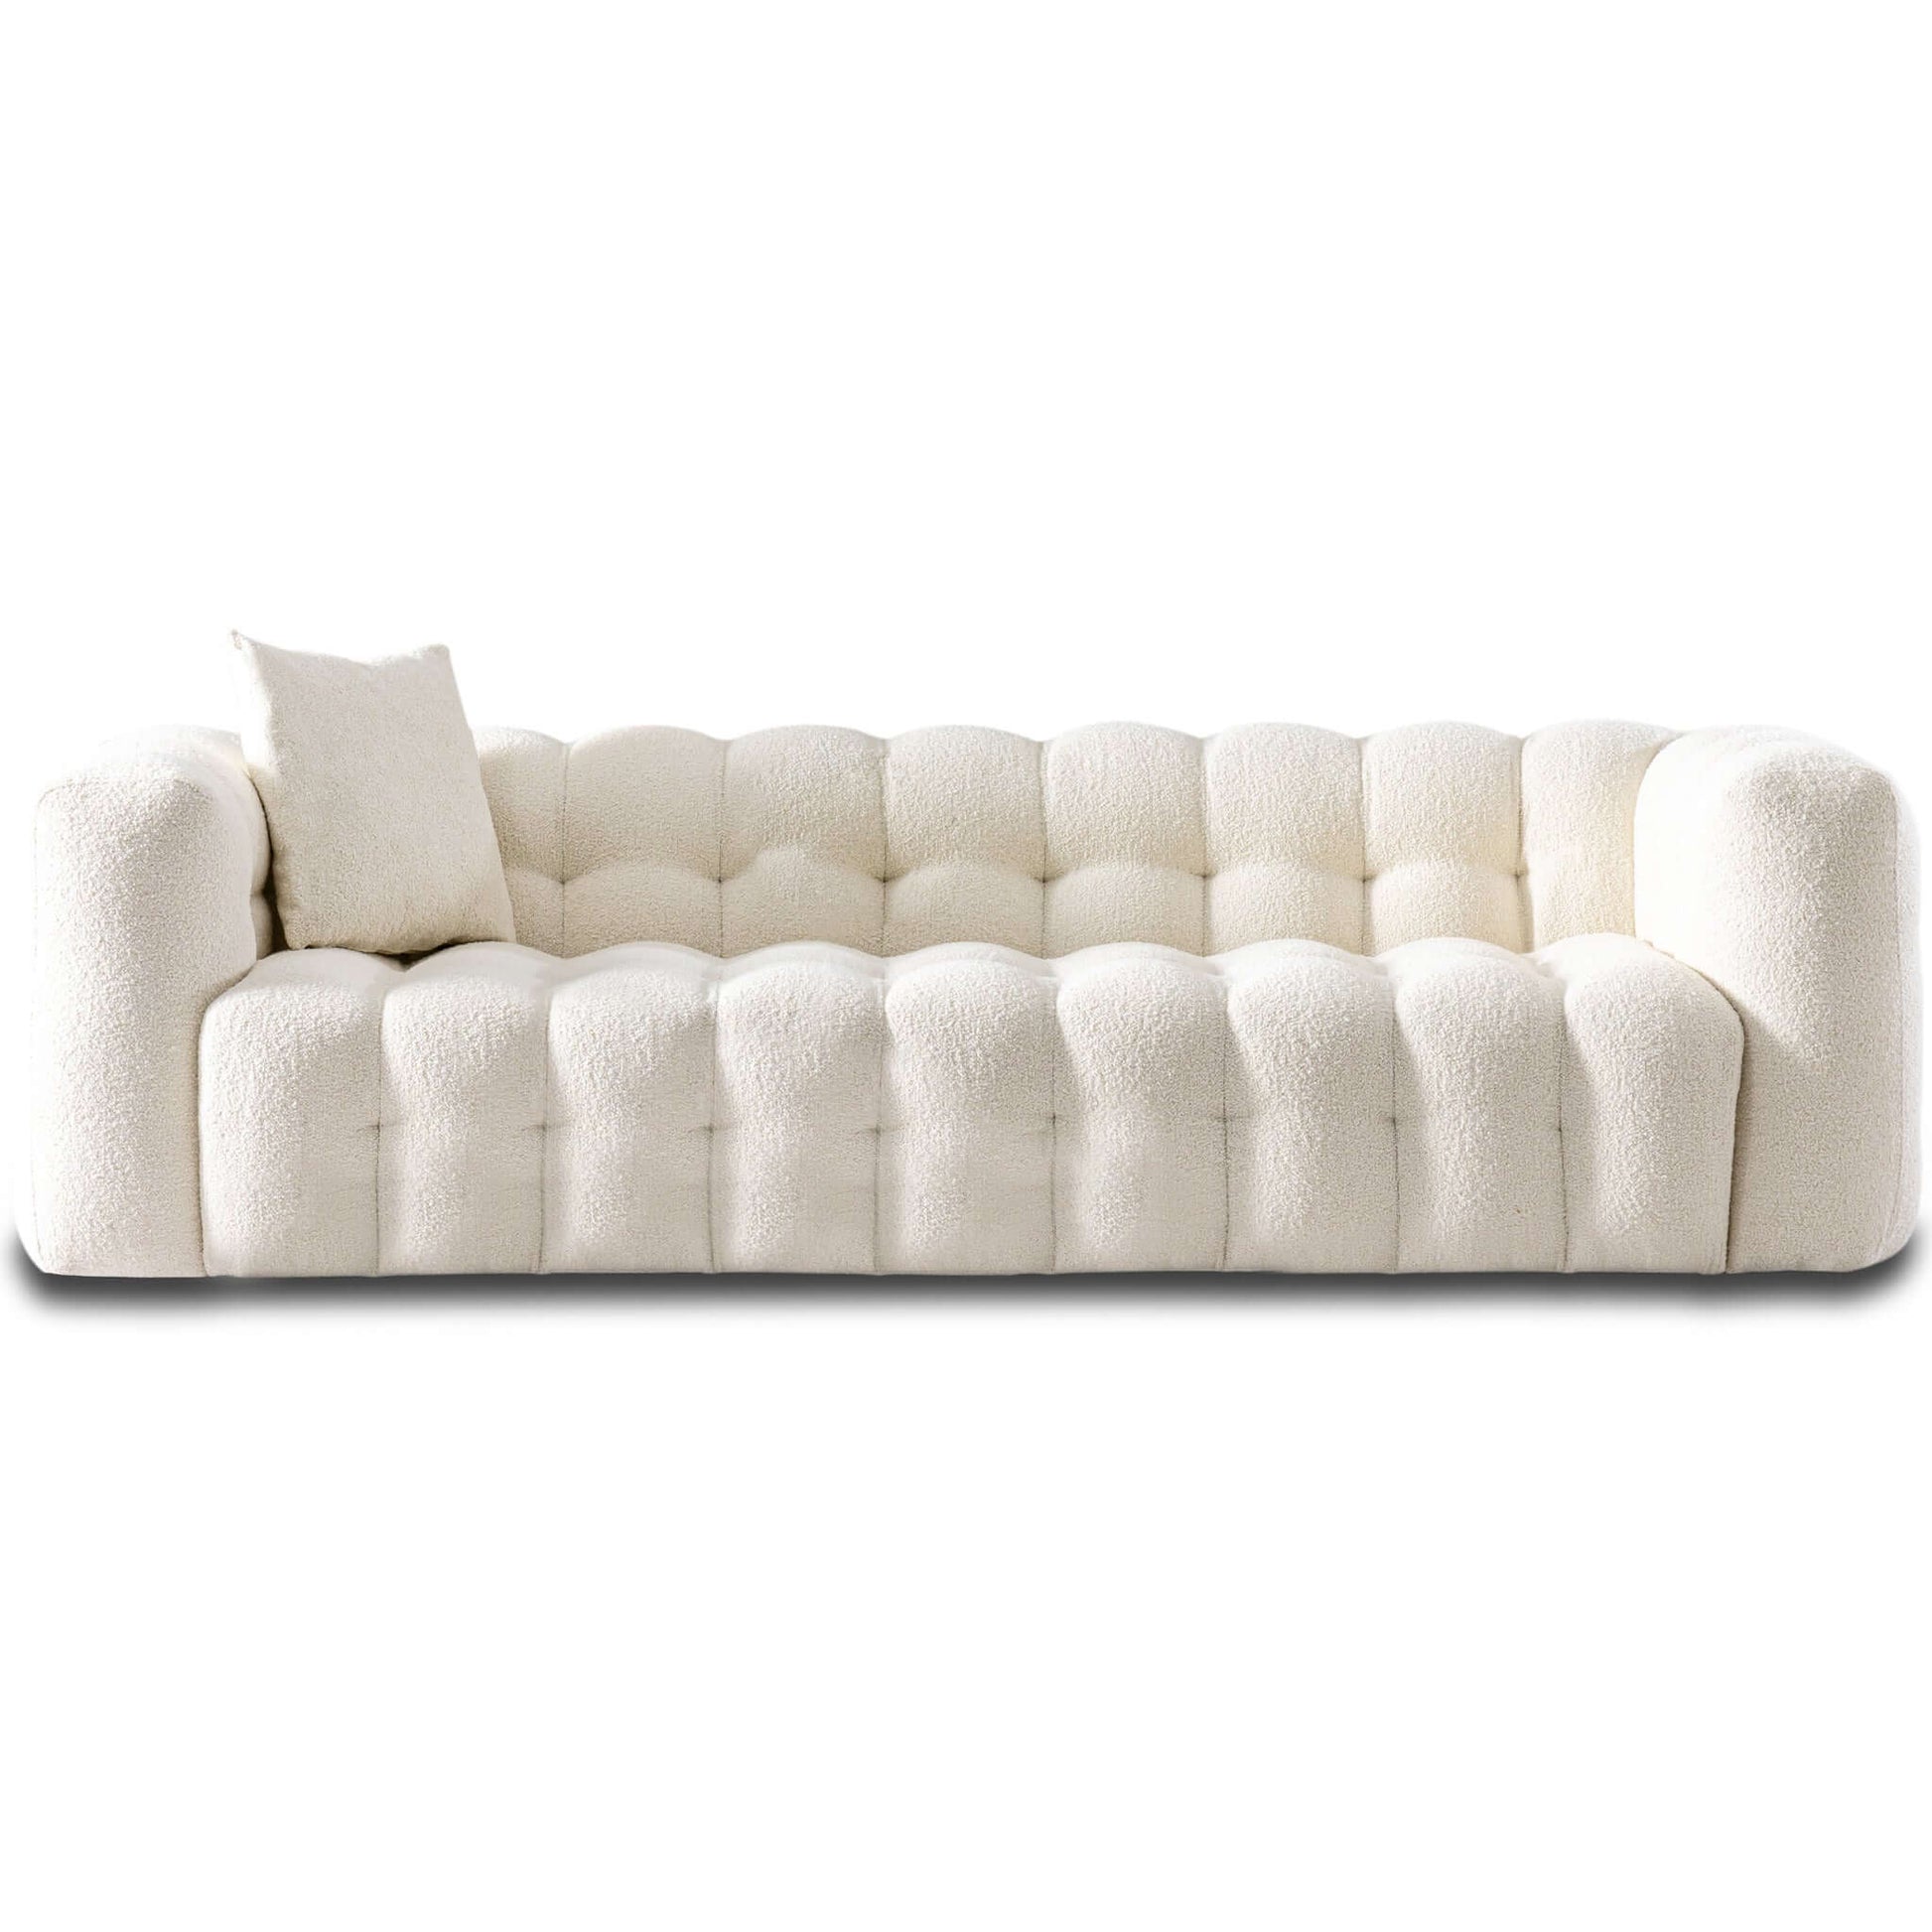 Ashcroft Furniture Co Sofas Cream Eden Modern Tufted Chesterfield Boucle Fabric Sofa